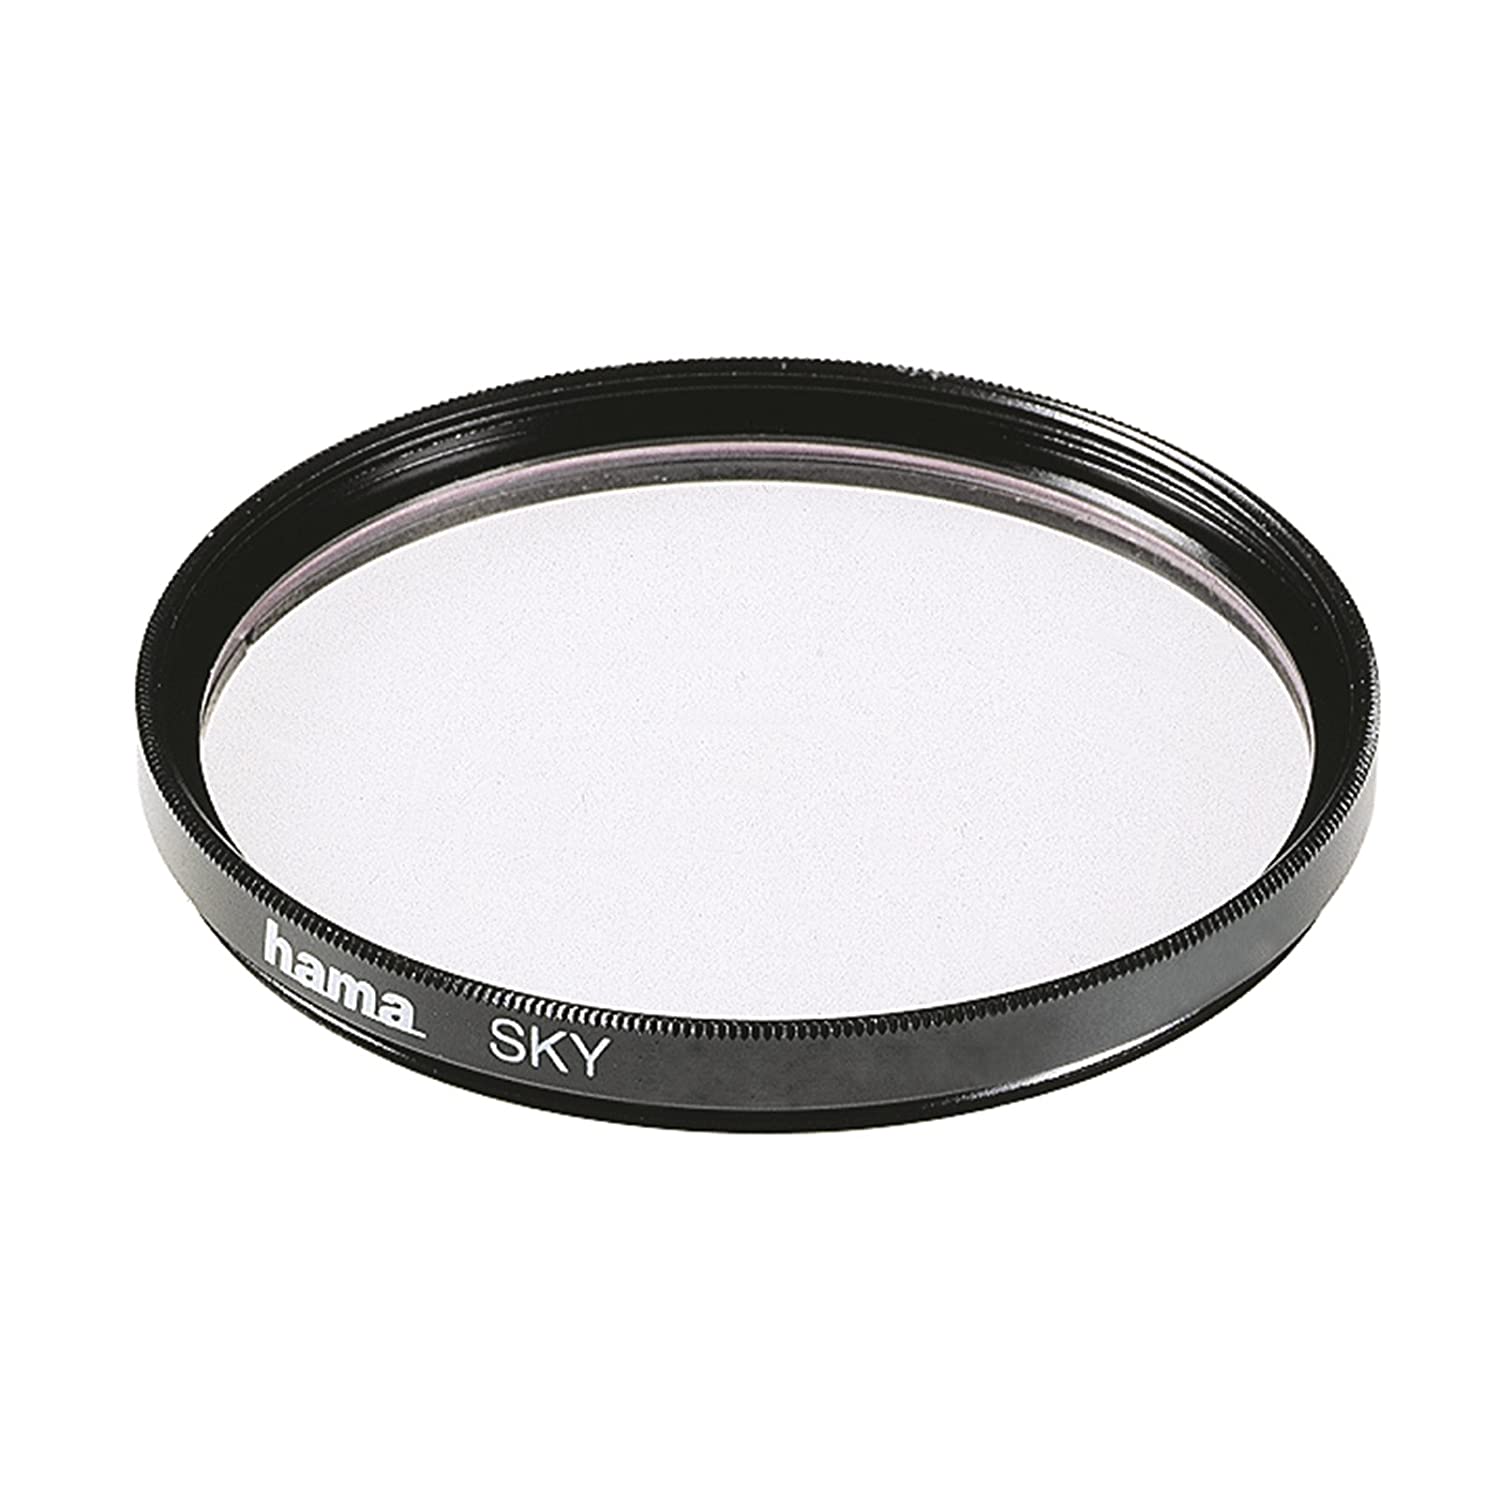 فیلتر لنز هاما مدل 72mm کد 71072